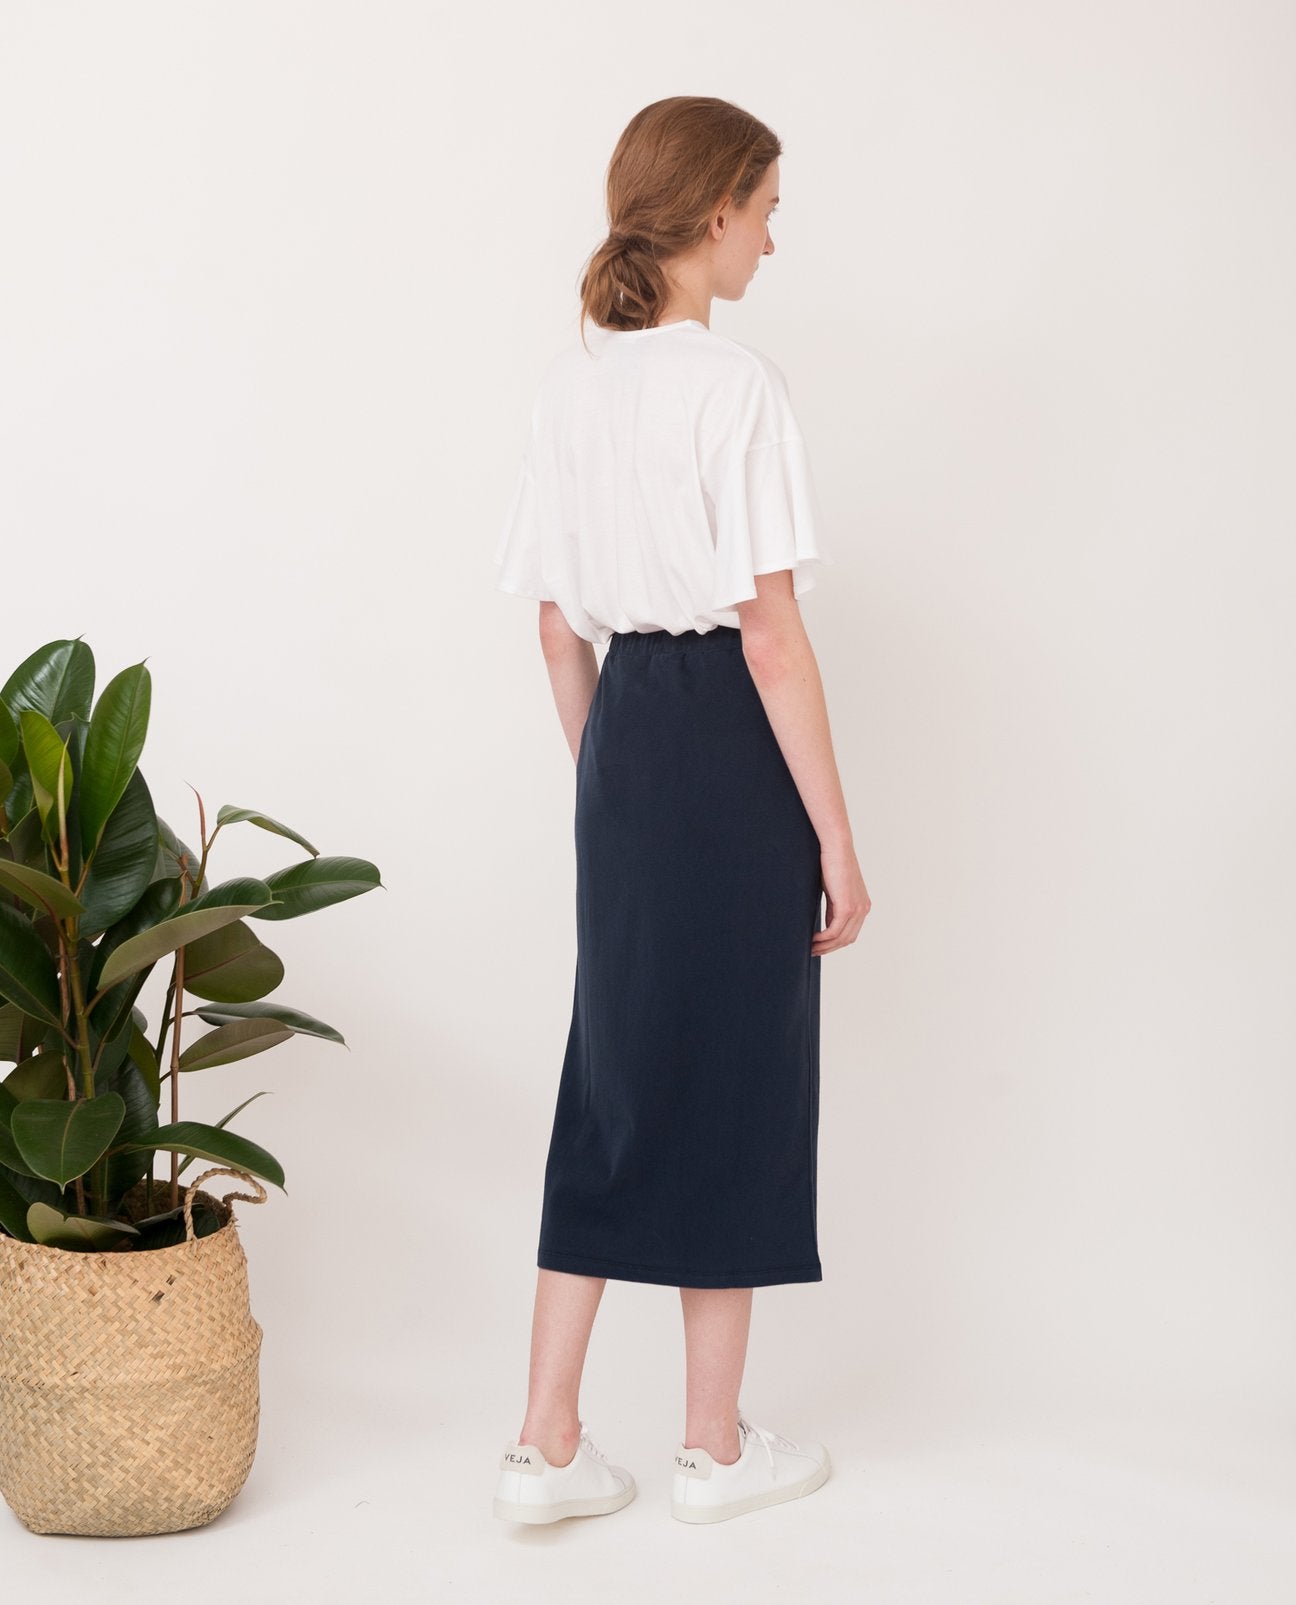 Pam Organic Cotton Skirt - Navy